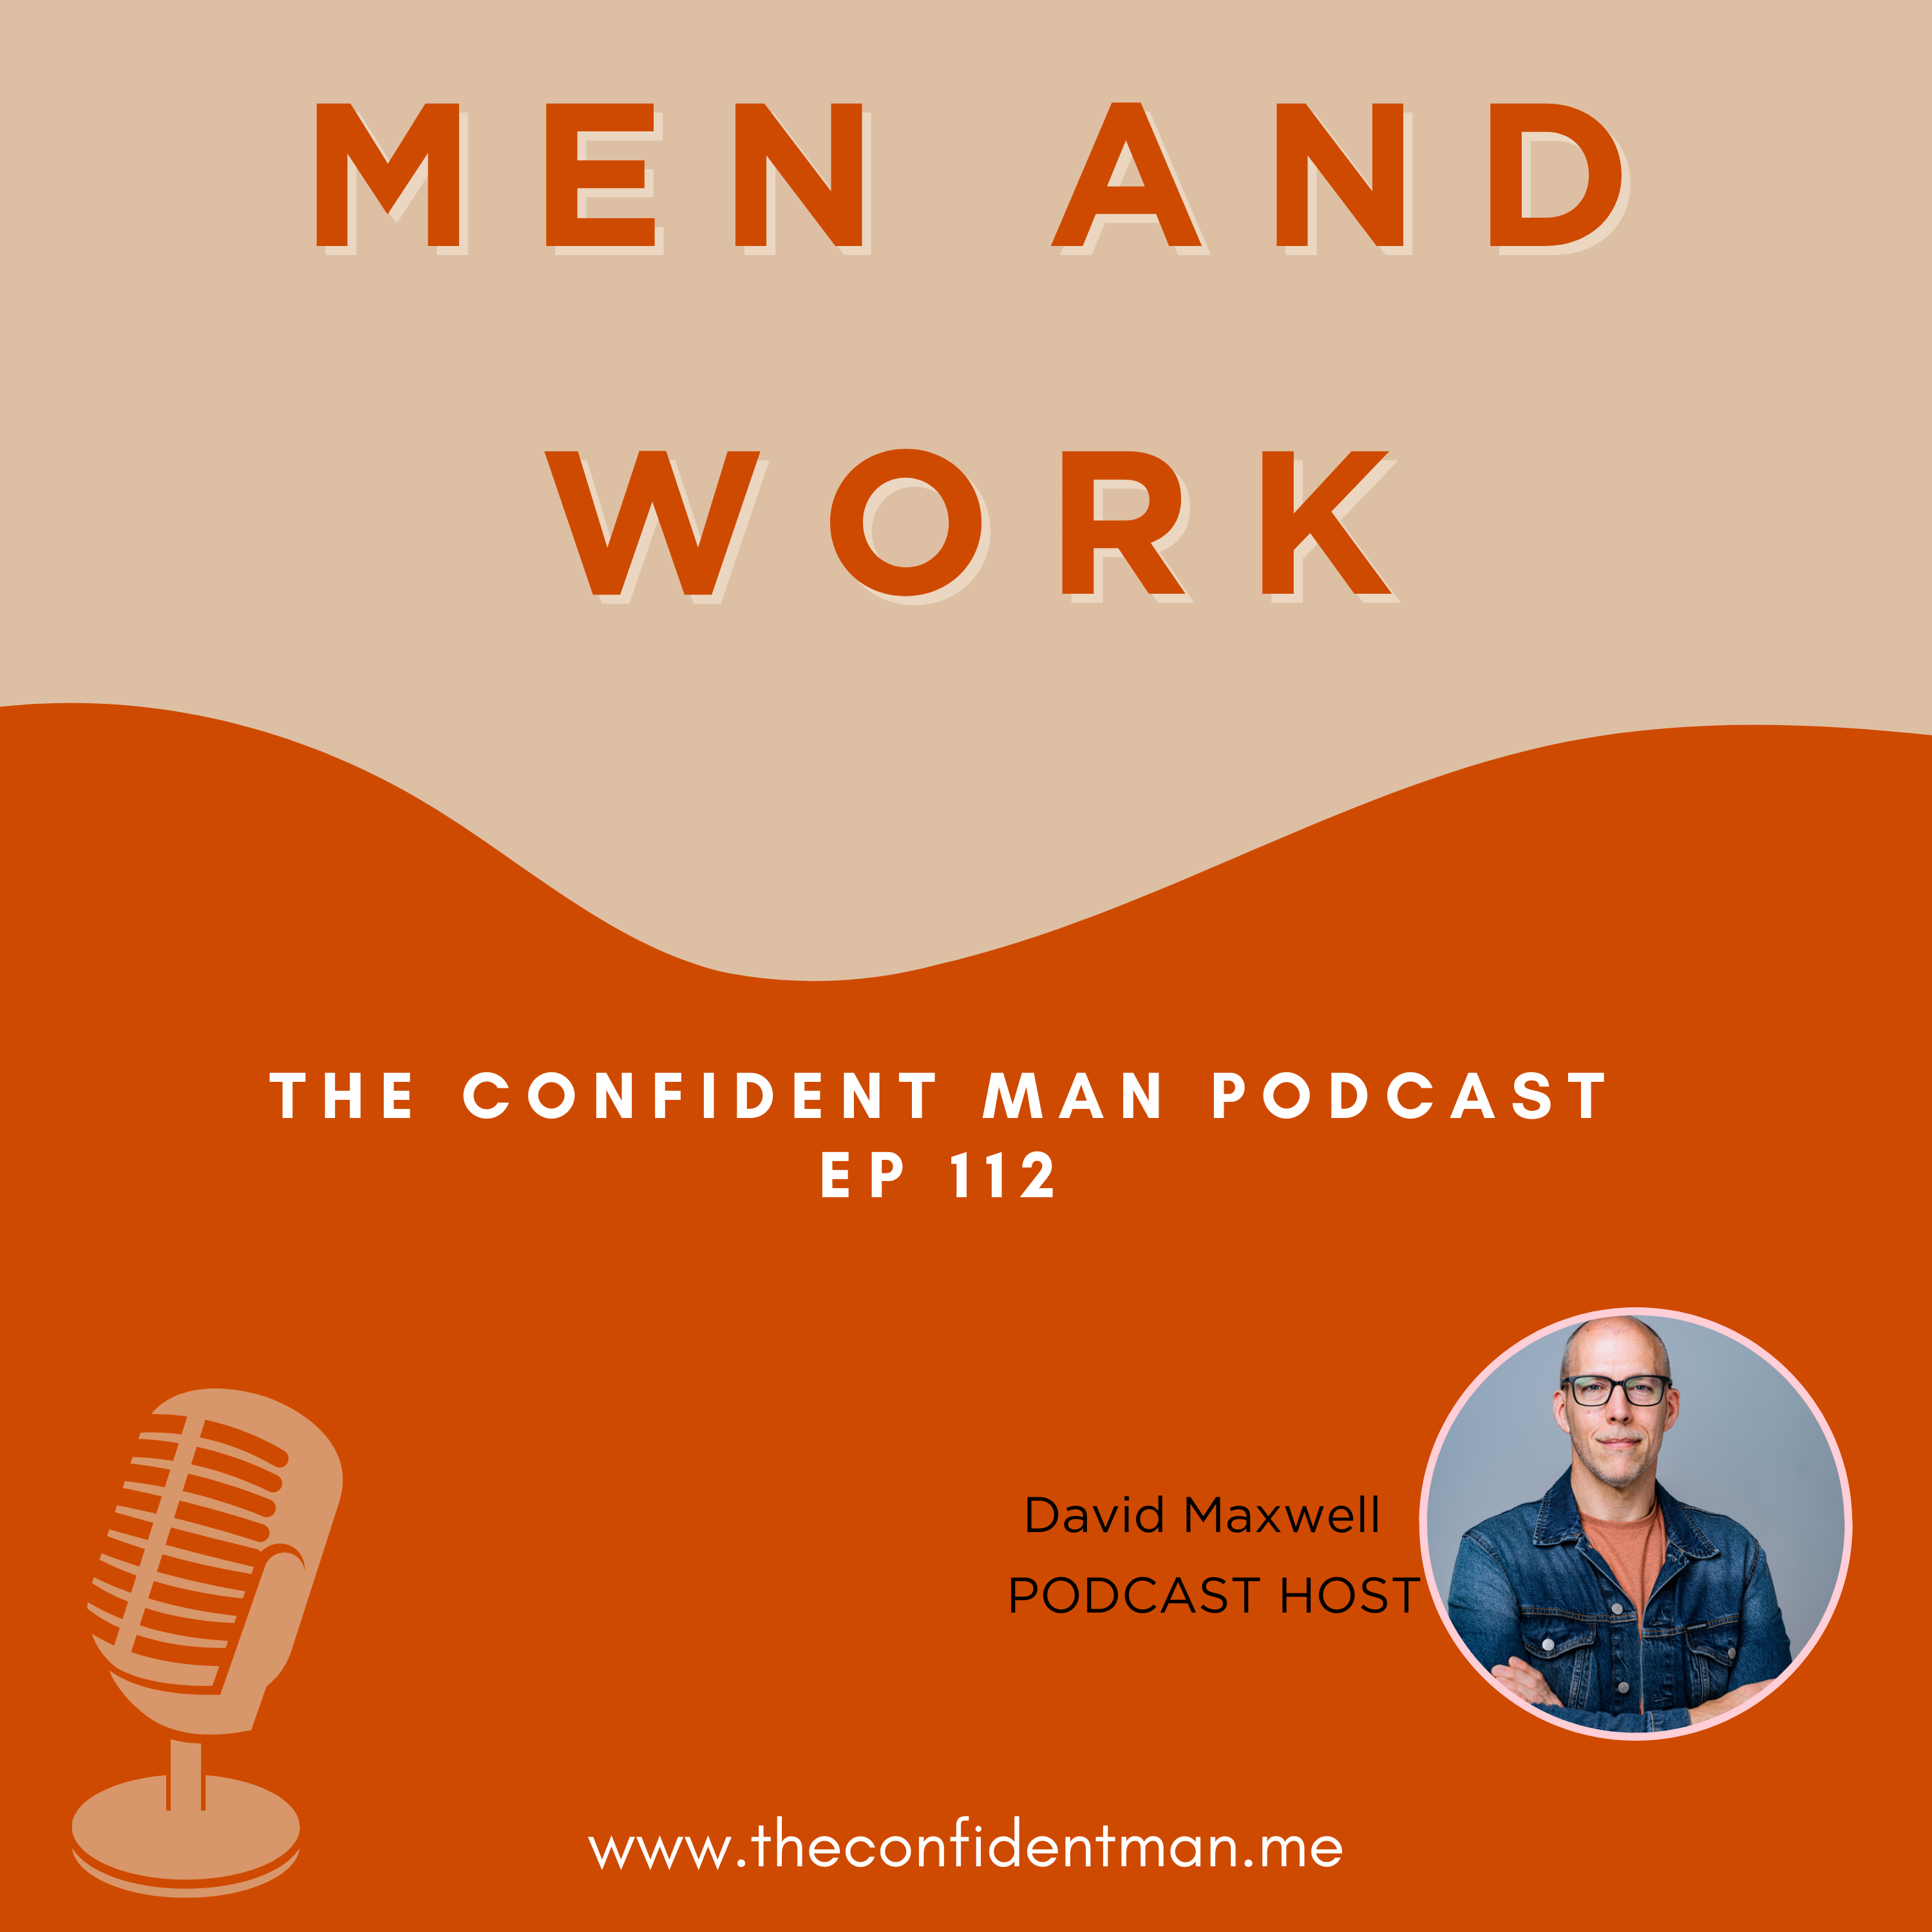 Artwork for podcast The Confident Man Podcast